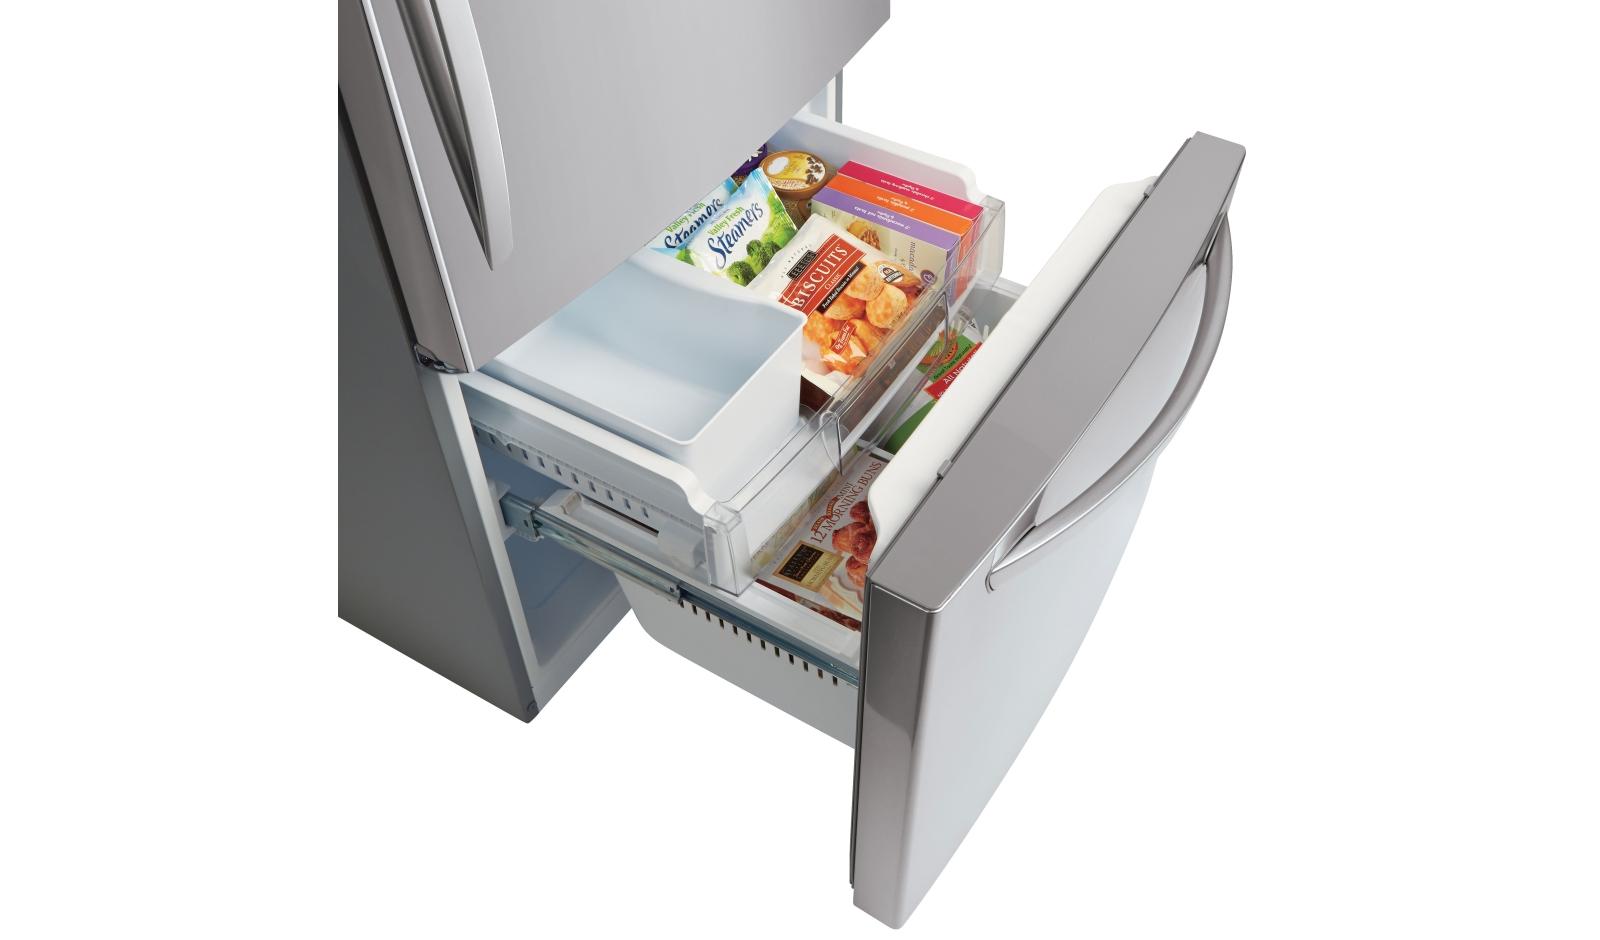 LG LDCS22220S: Large 30 Inch Wide Bottom Freezer Refrigerator | LG USA